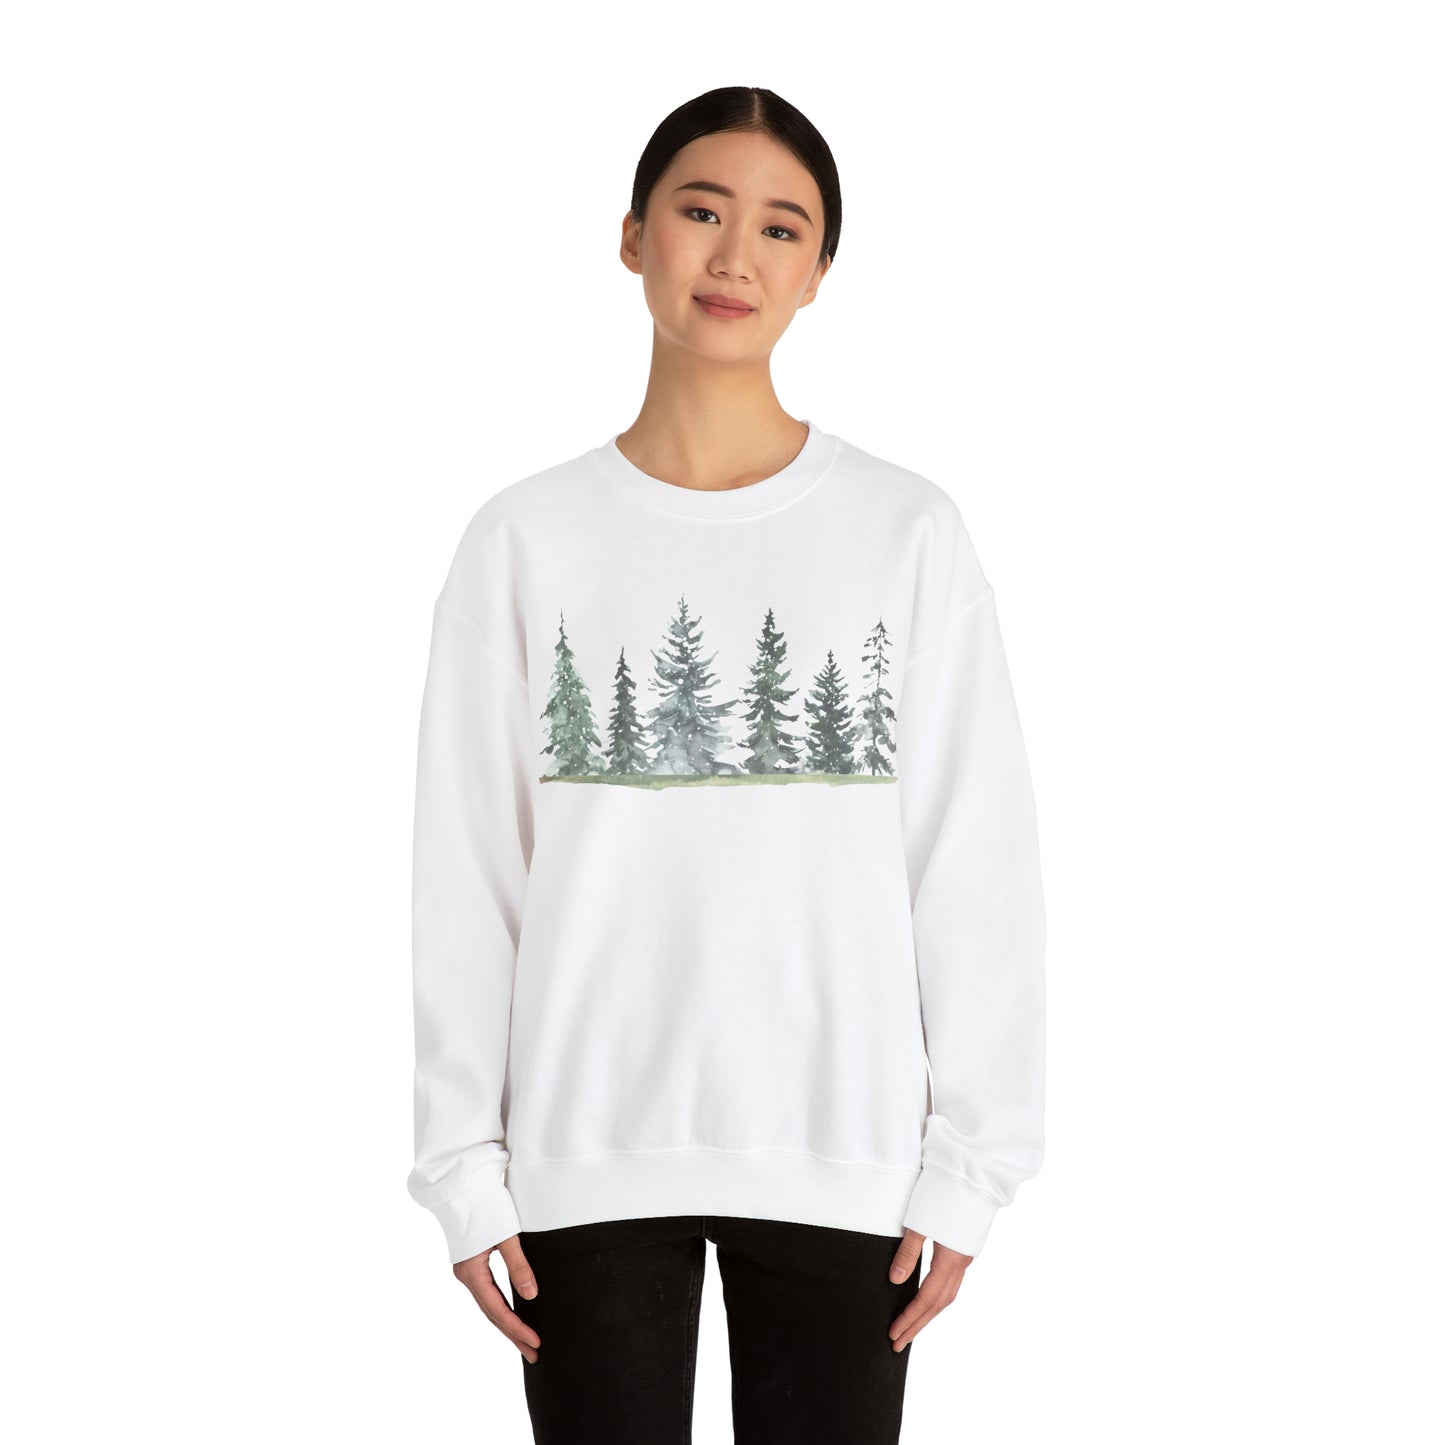 Pine Tree  Sweatshirt , Christmas Tree Sweatshirt, Snow Pine Tree Sweatshirt, Sweatshirt for Women,